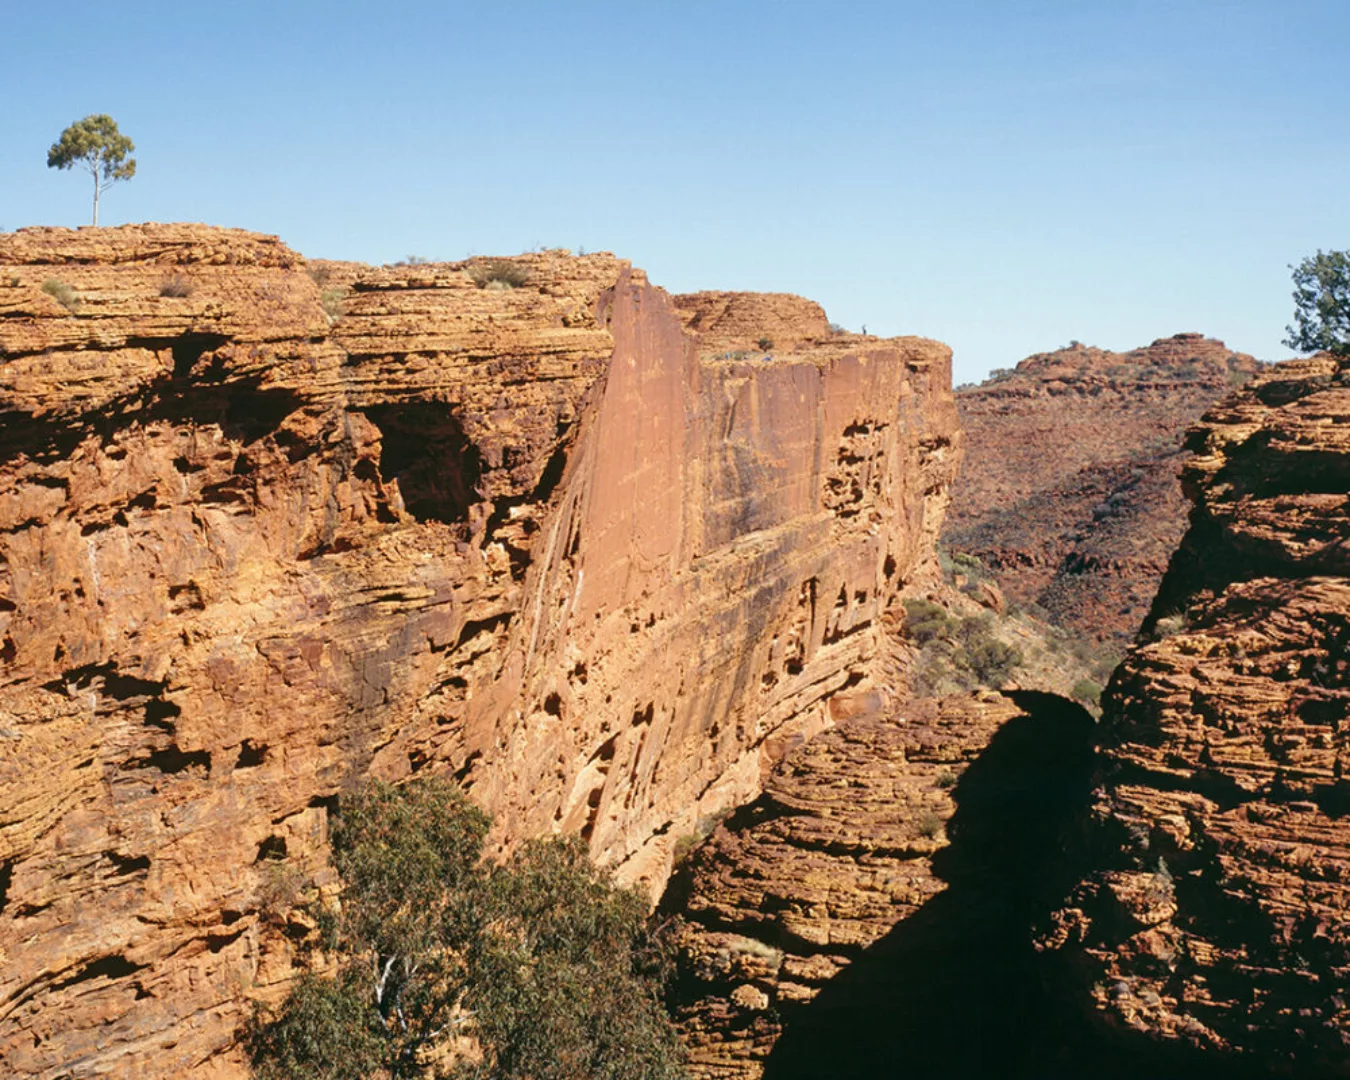 Fototapete "Kings Canyon" 4,00x2,50 m / Glattvlies Perlmutt günstig online kaufen